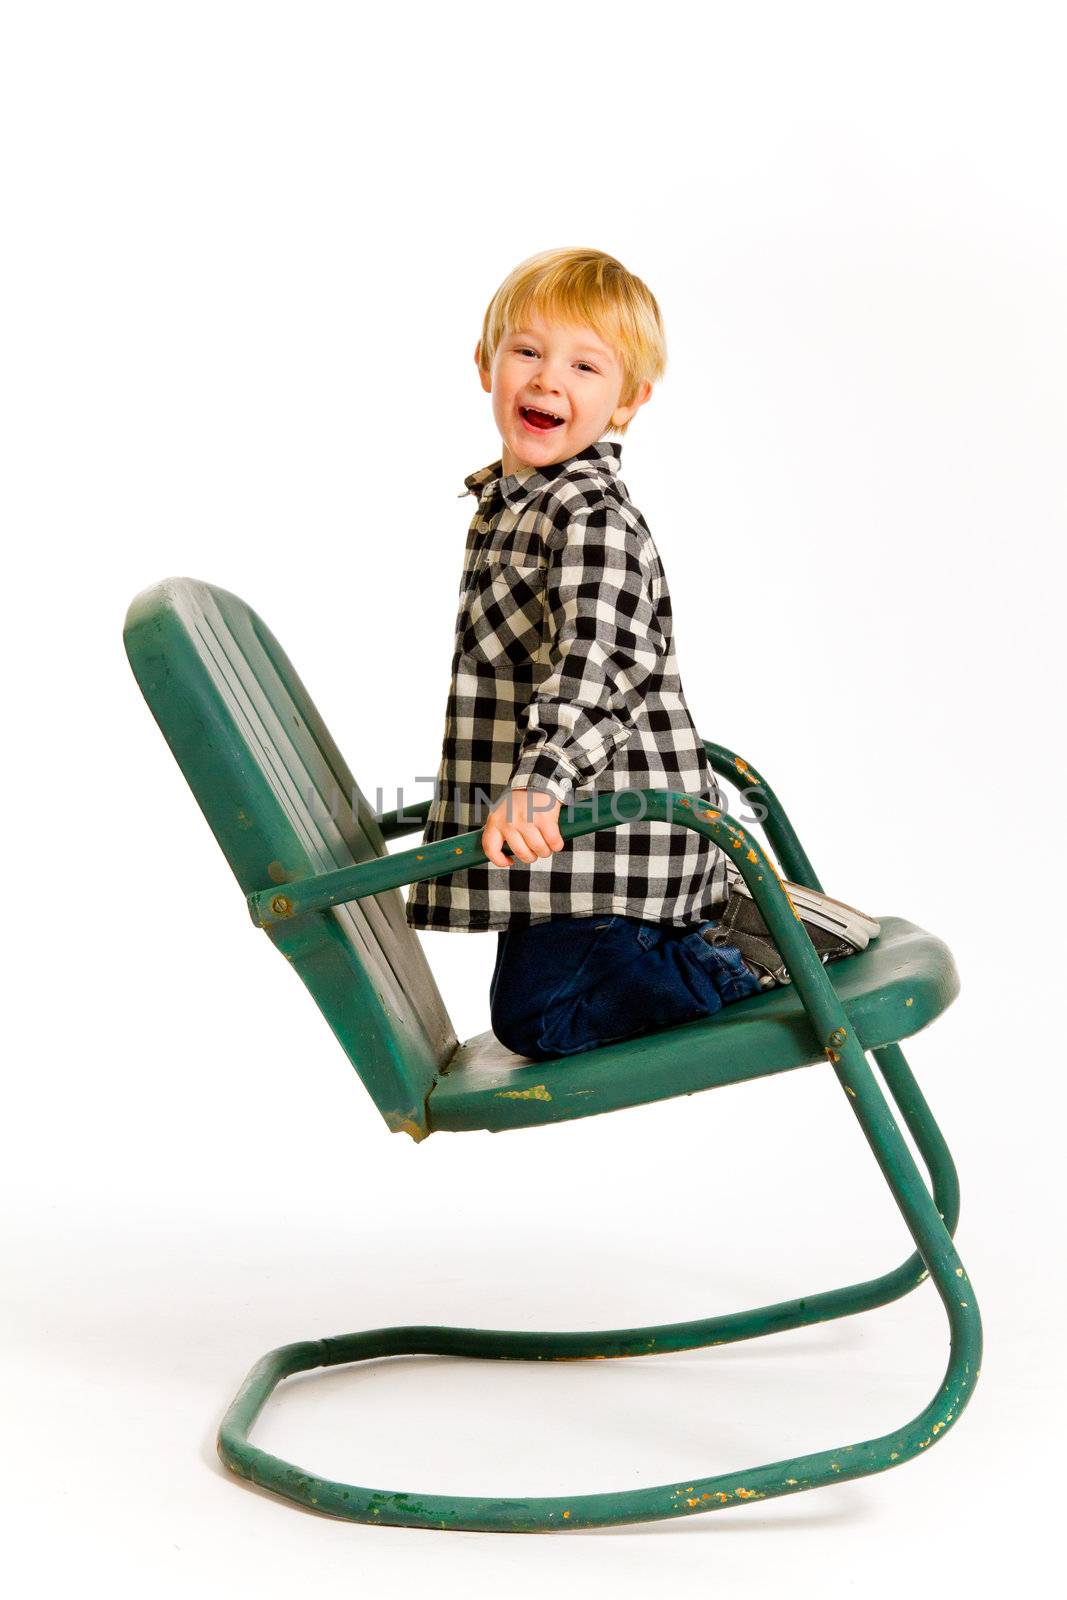 Boy Having Fun On Chair by joshuaraineyphotography